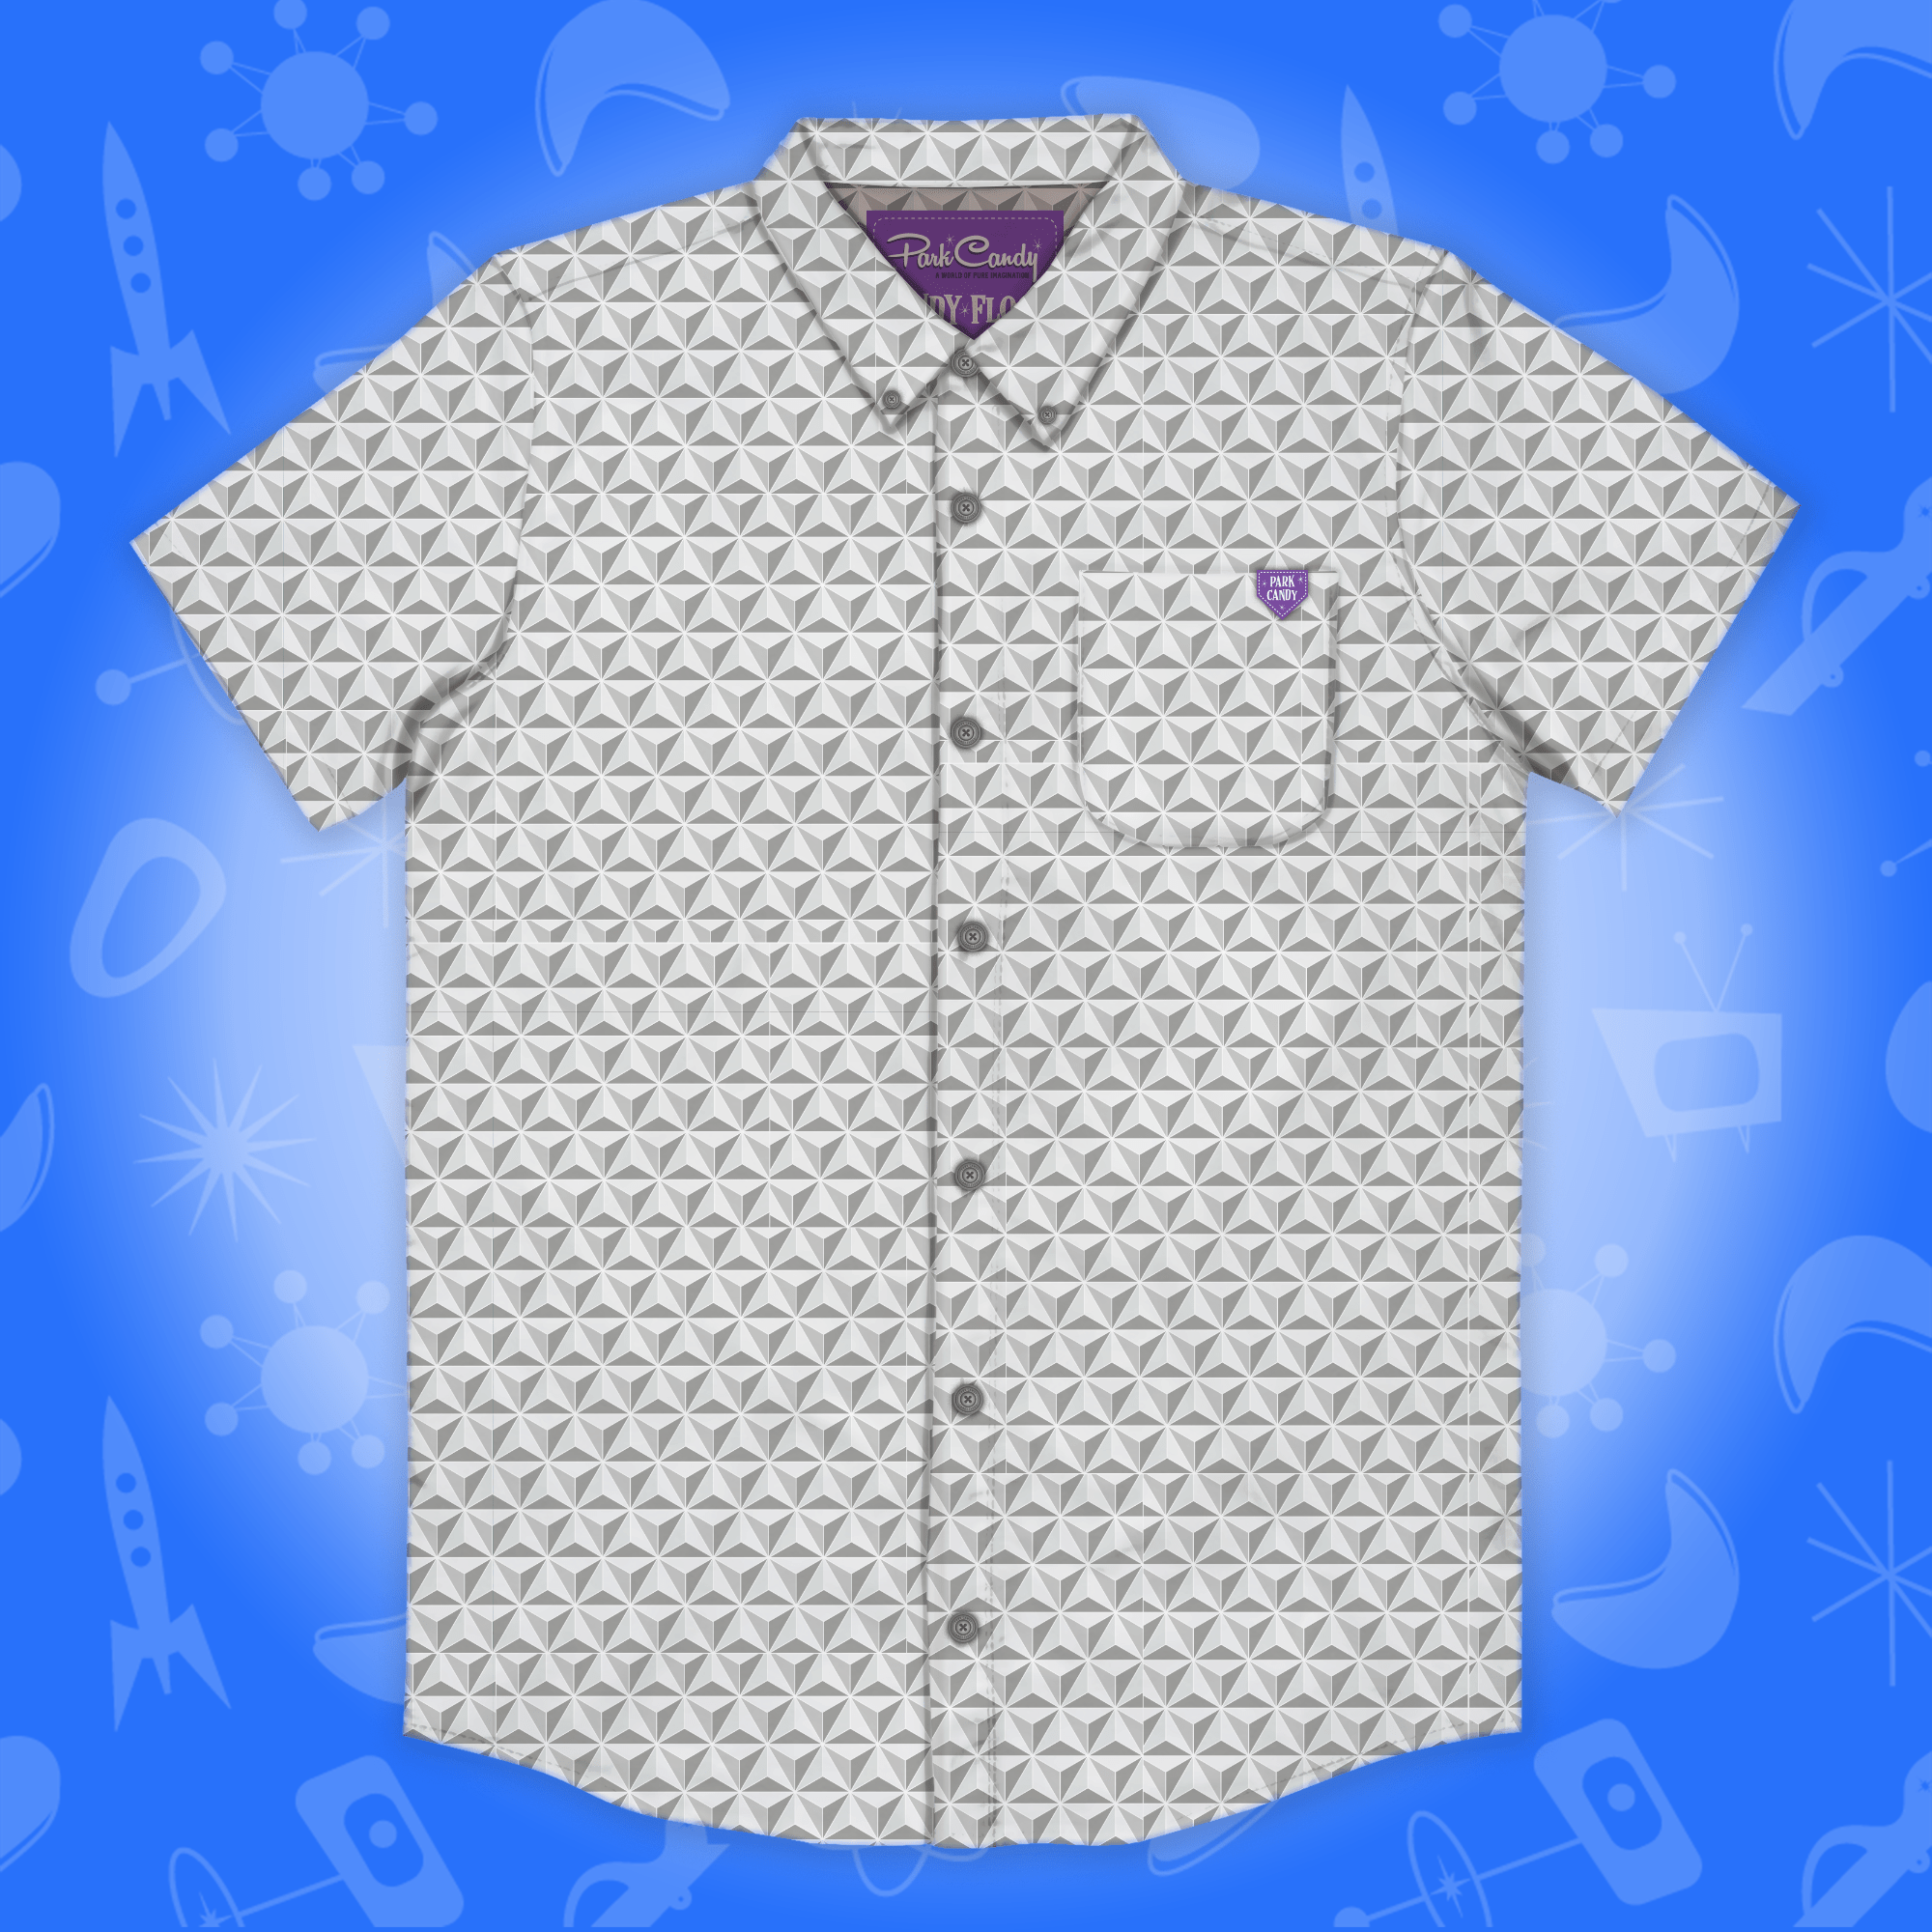 Spaceship Button Up Shirt - APRIL PREORDER - Park Candy